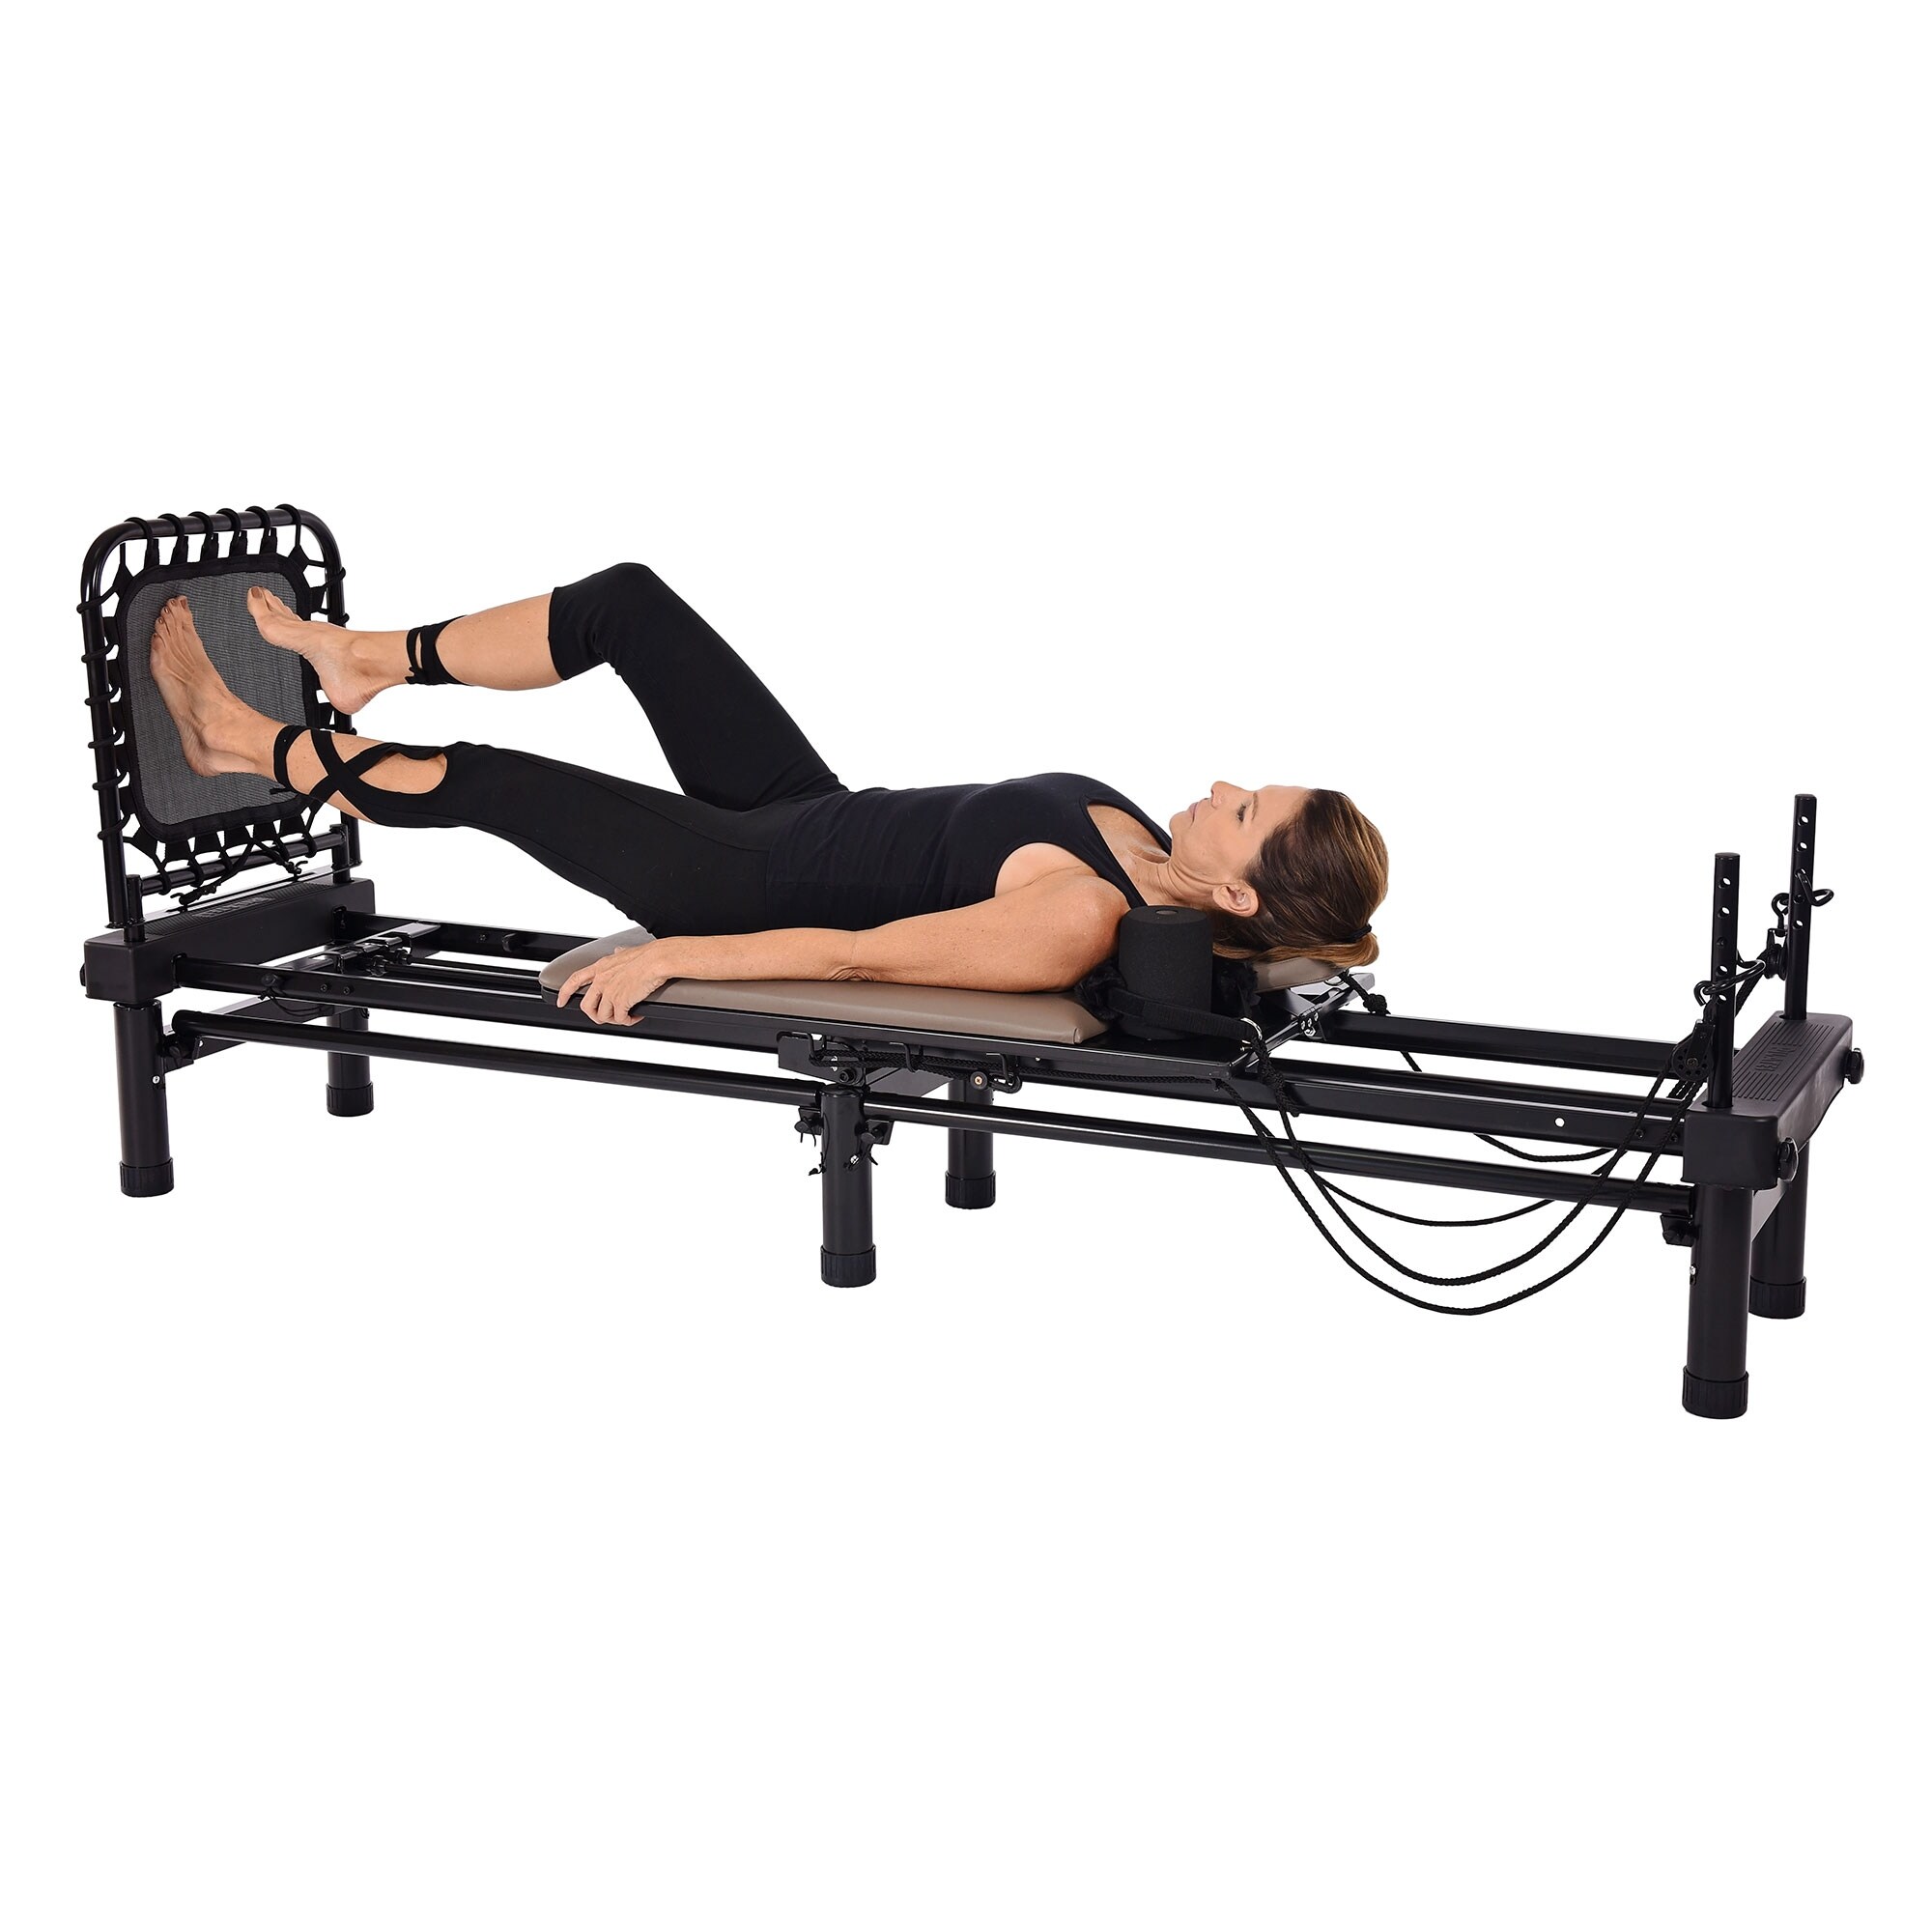 Stamina Products AeroPilates Reformer 651 Whole Body Resistance Workout  System - 100 pounds